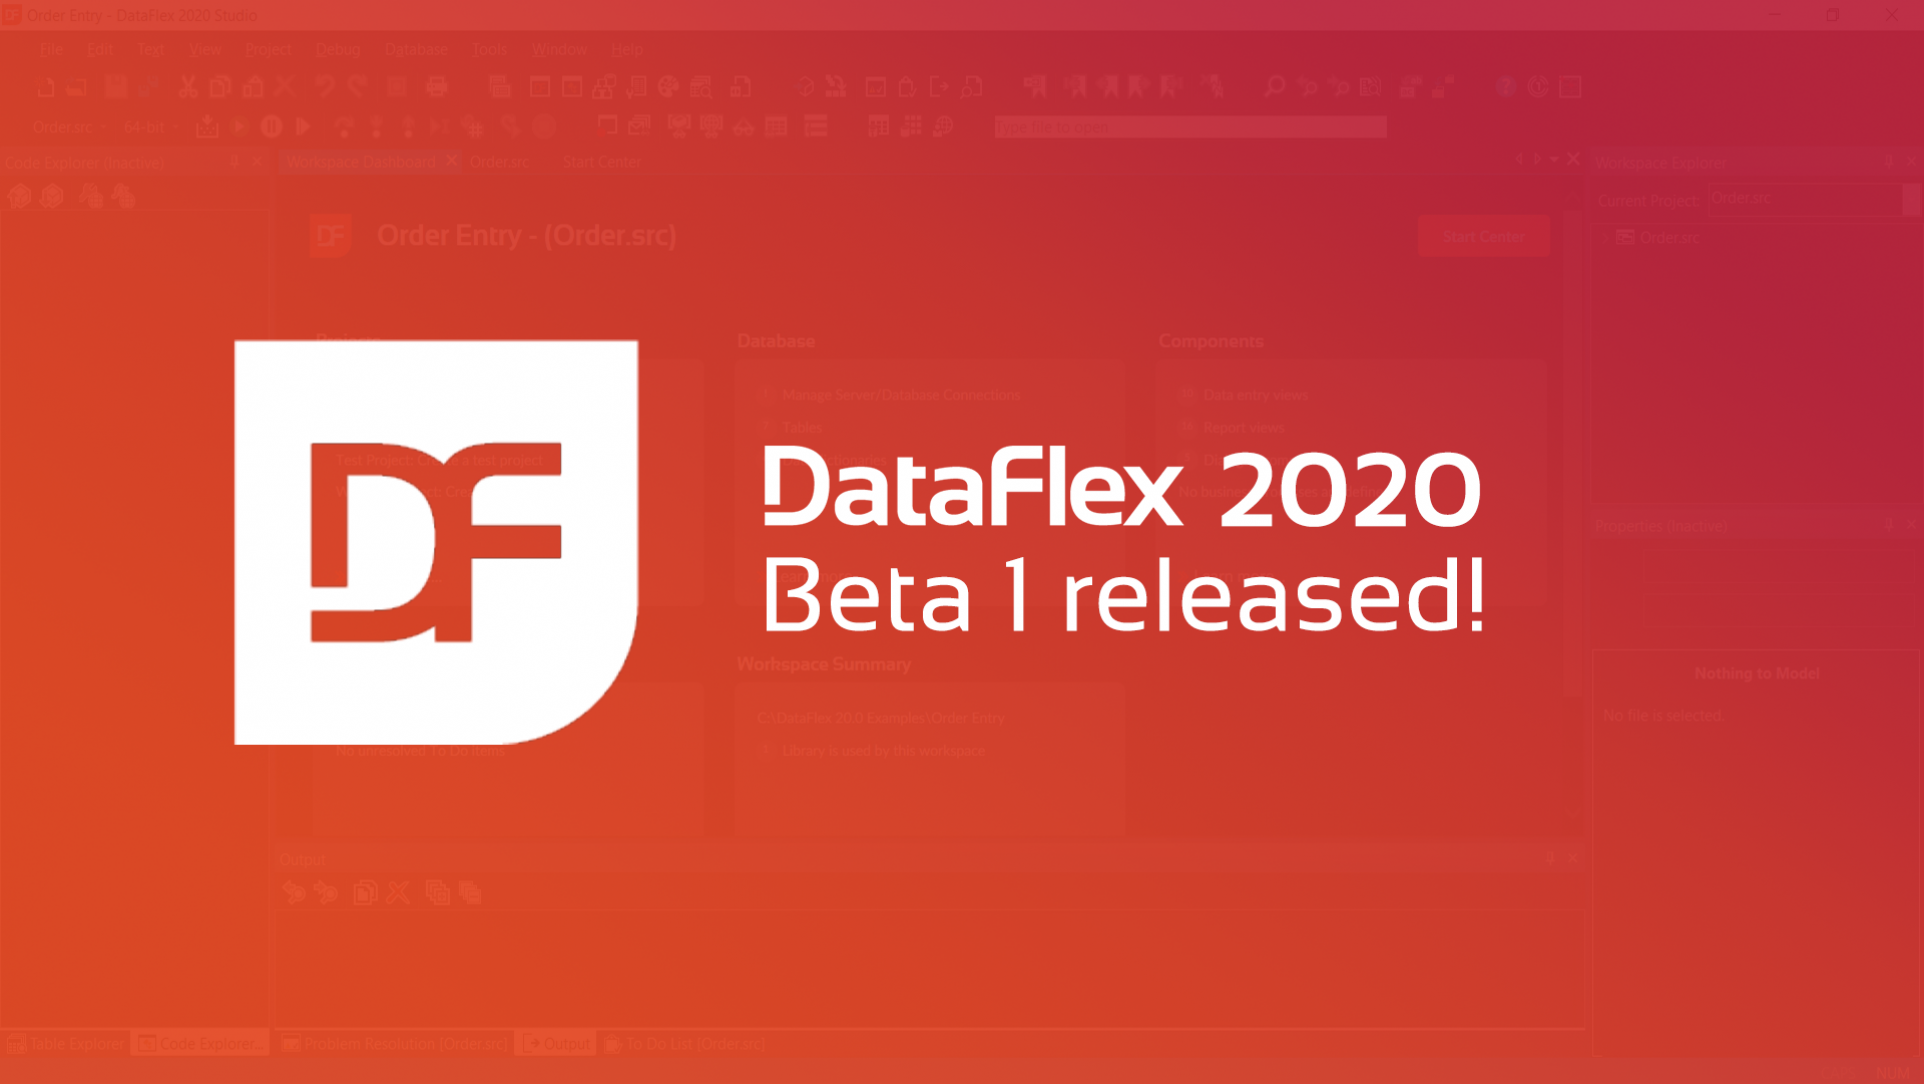 DataFlex 2020 Beta 1 released